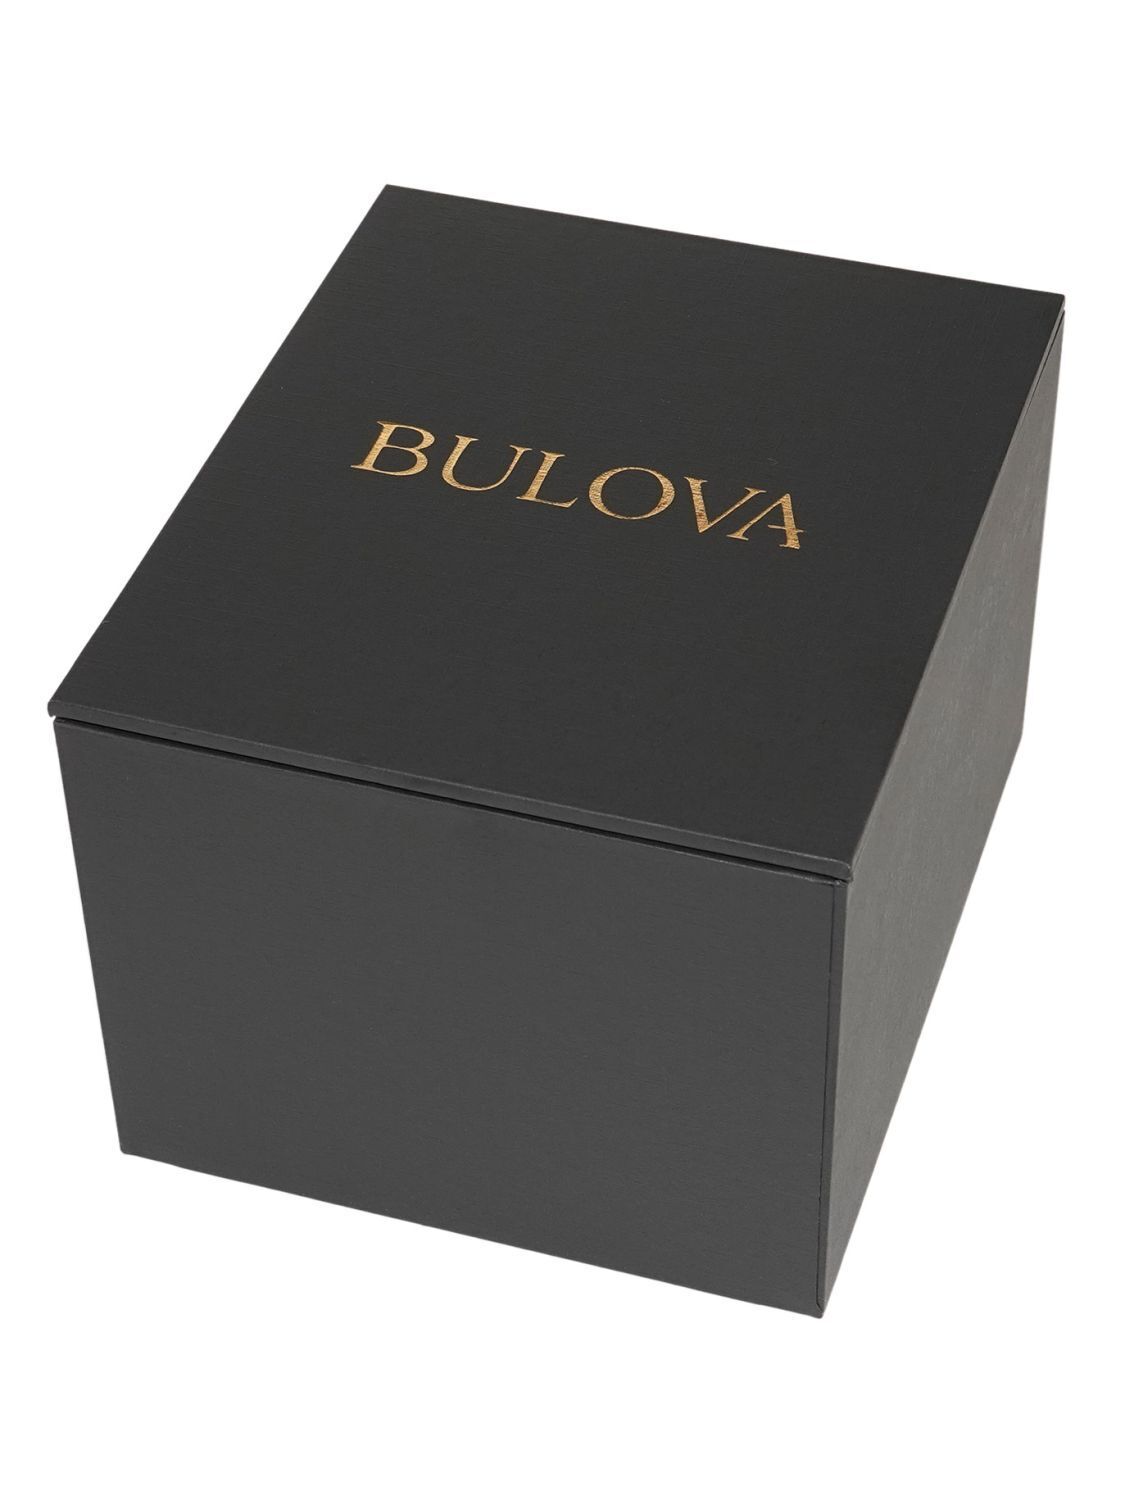 Bulova Men's Automatic Watch Old Classic Steel/Black 96A293 | eBay